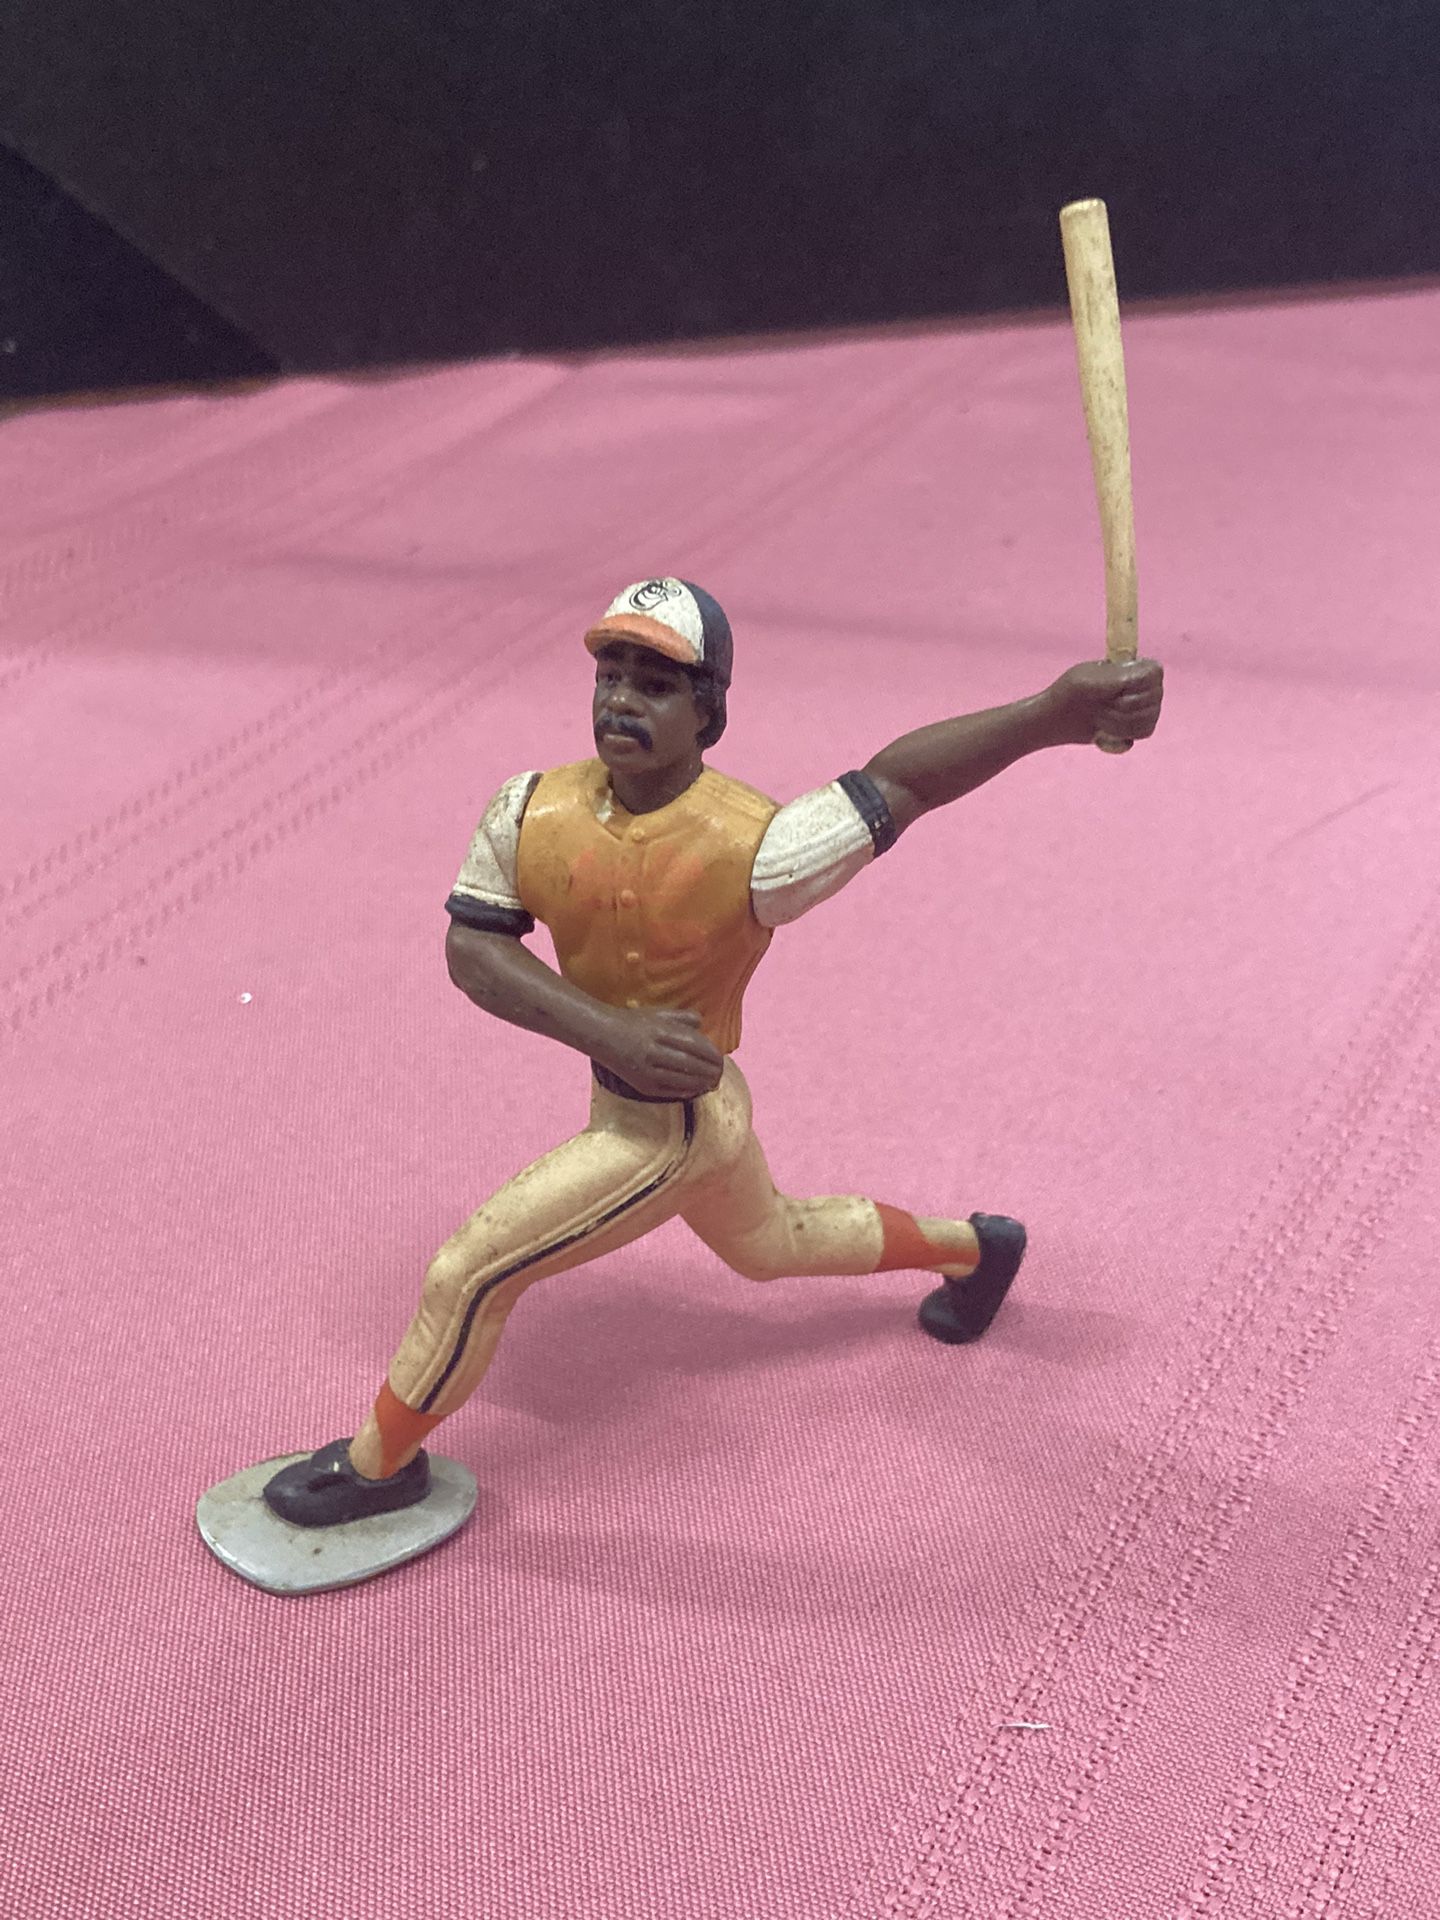 Collectible Baseball Action Figure, Vintage